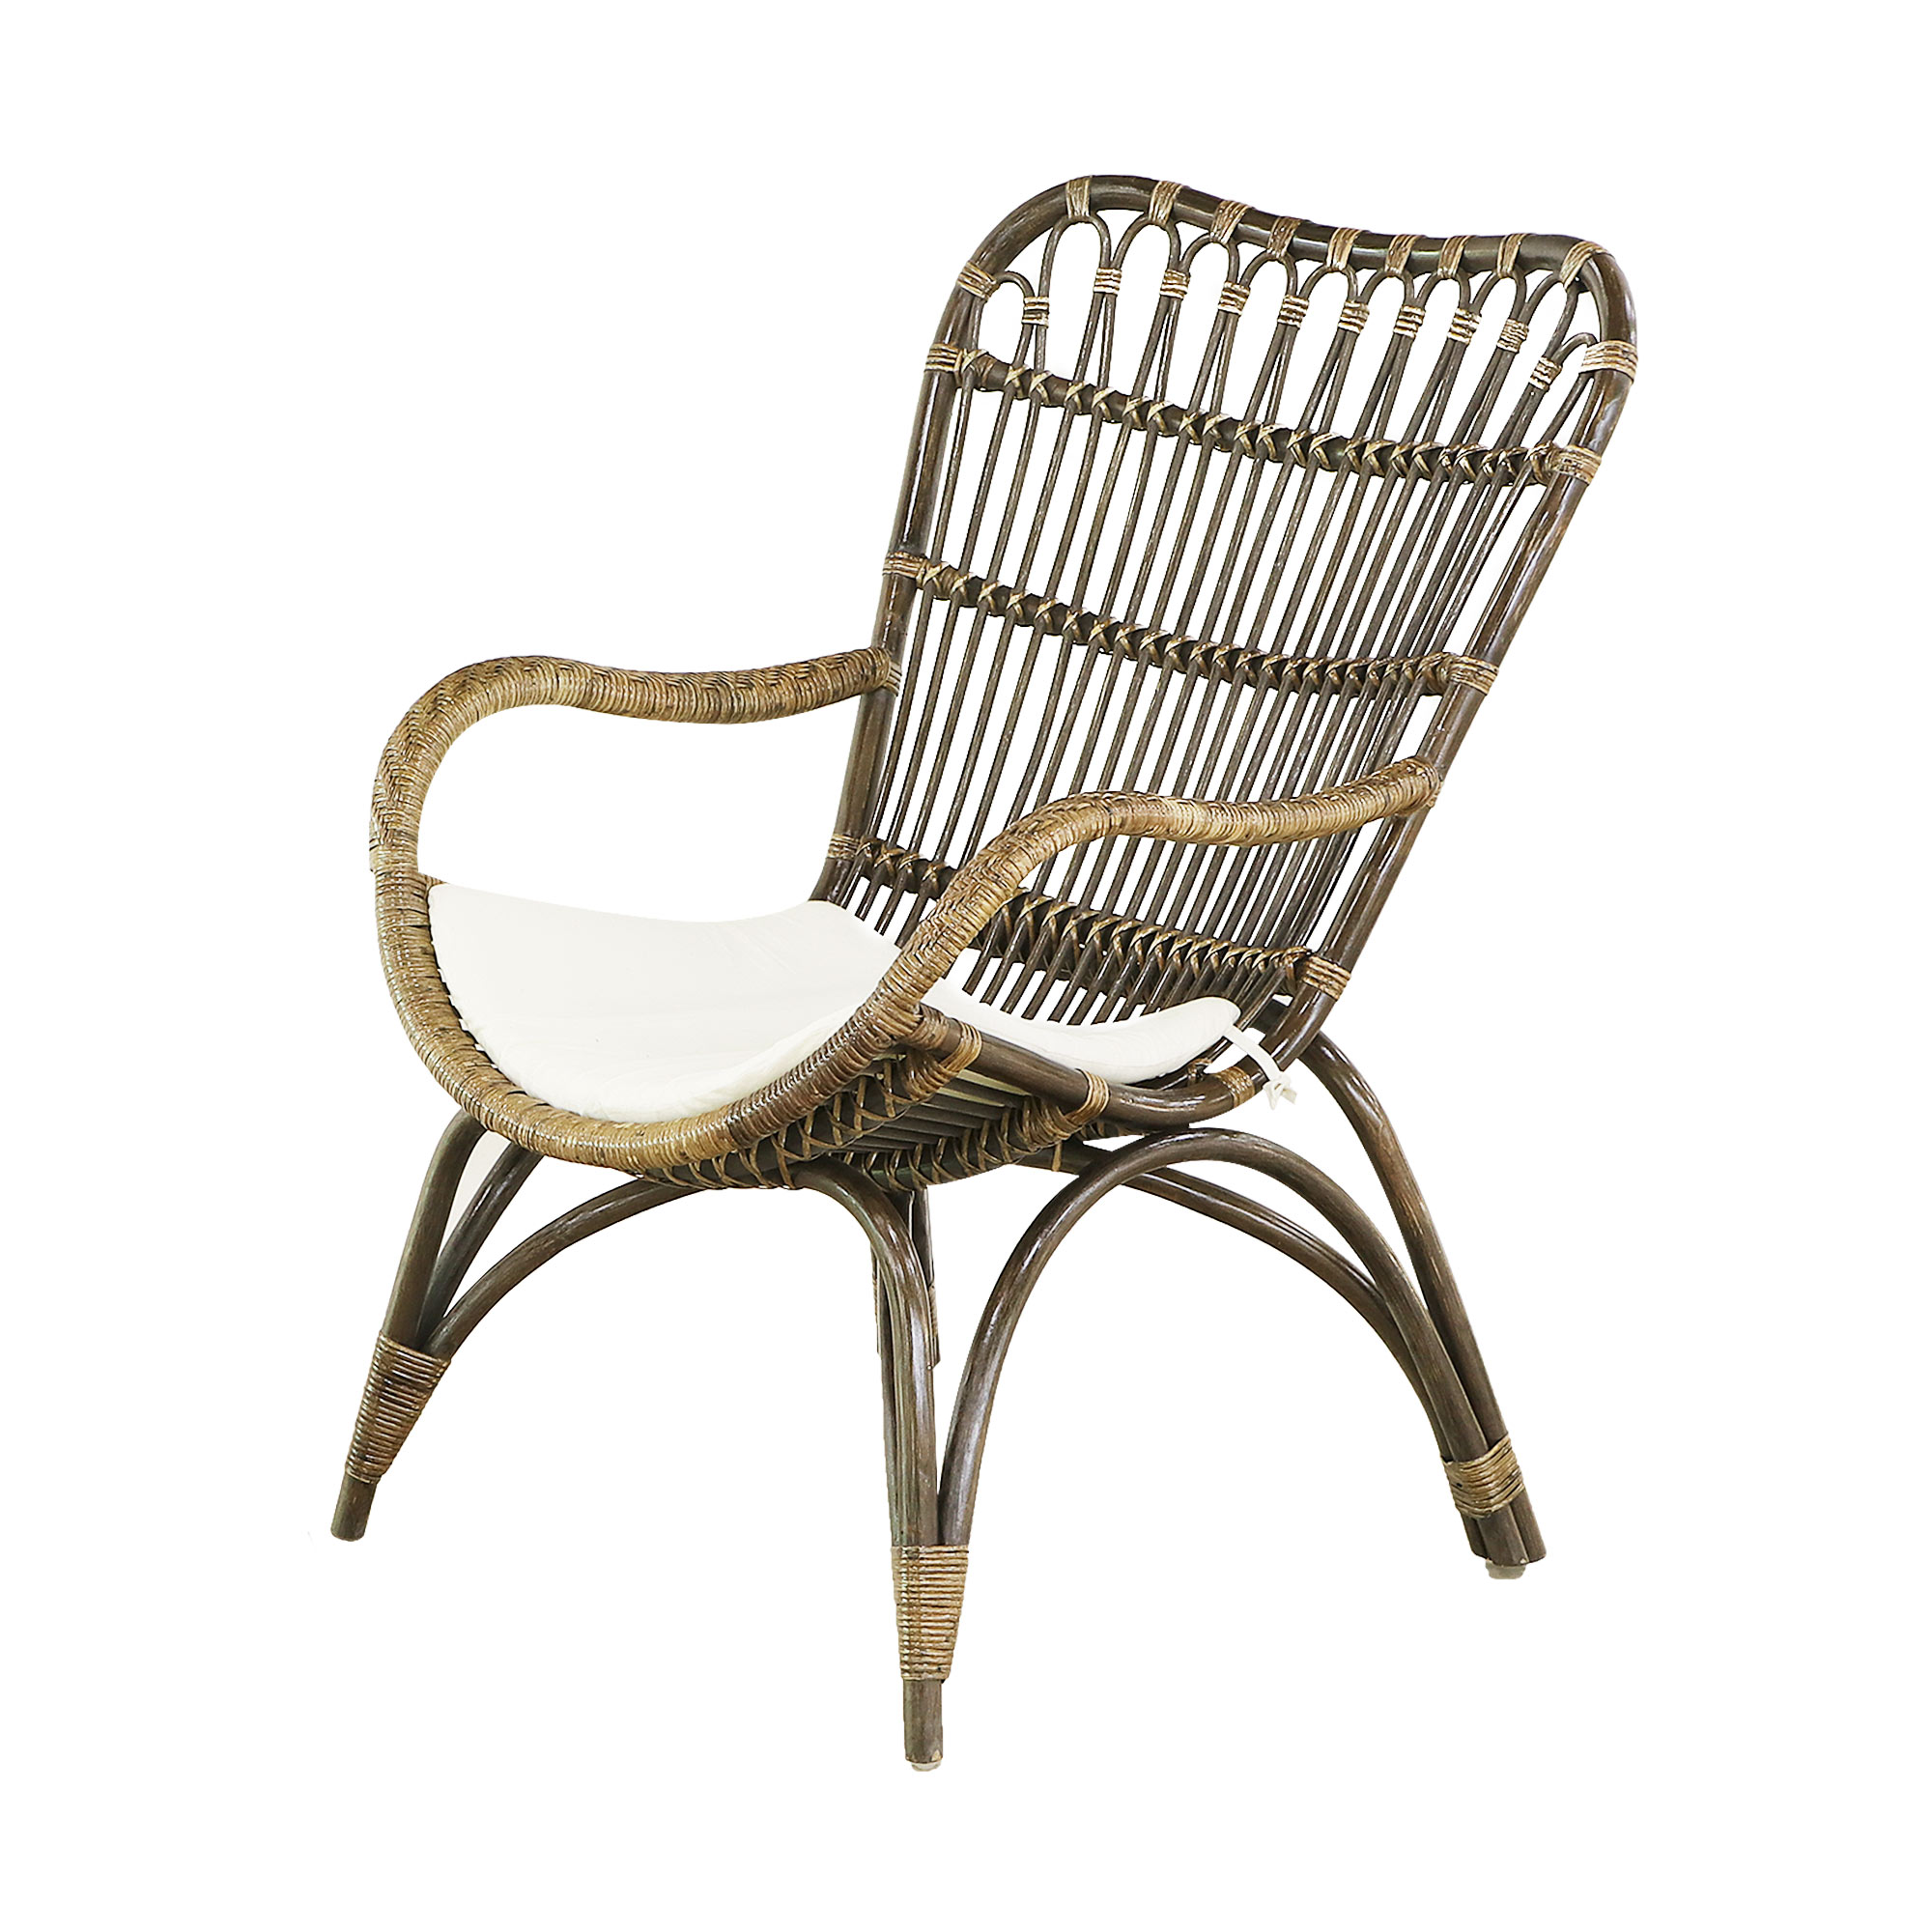 Комплект Rattan grand: кресло, оттоманка lounge md brown, цвет коричневый - фото 2